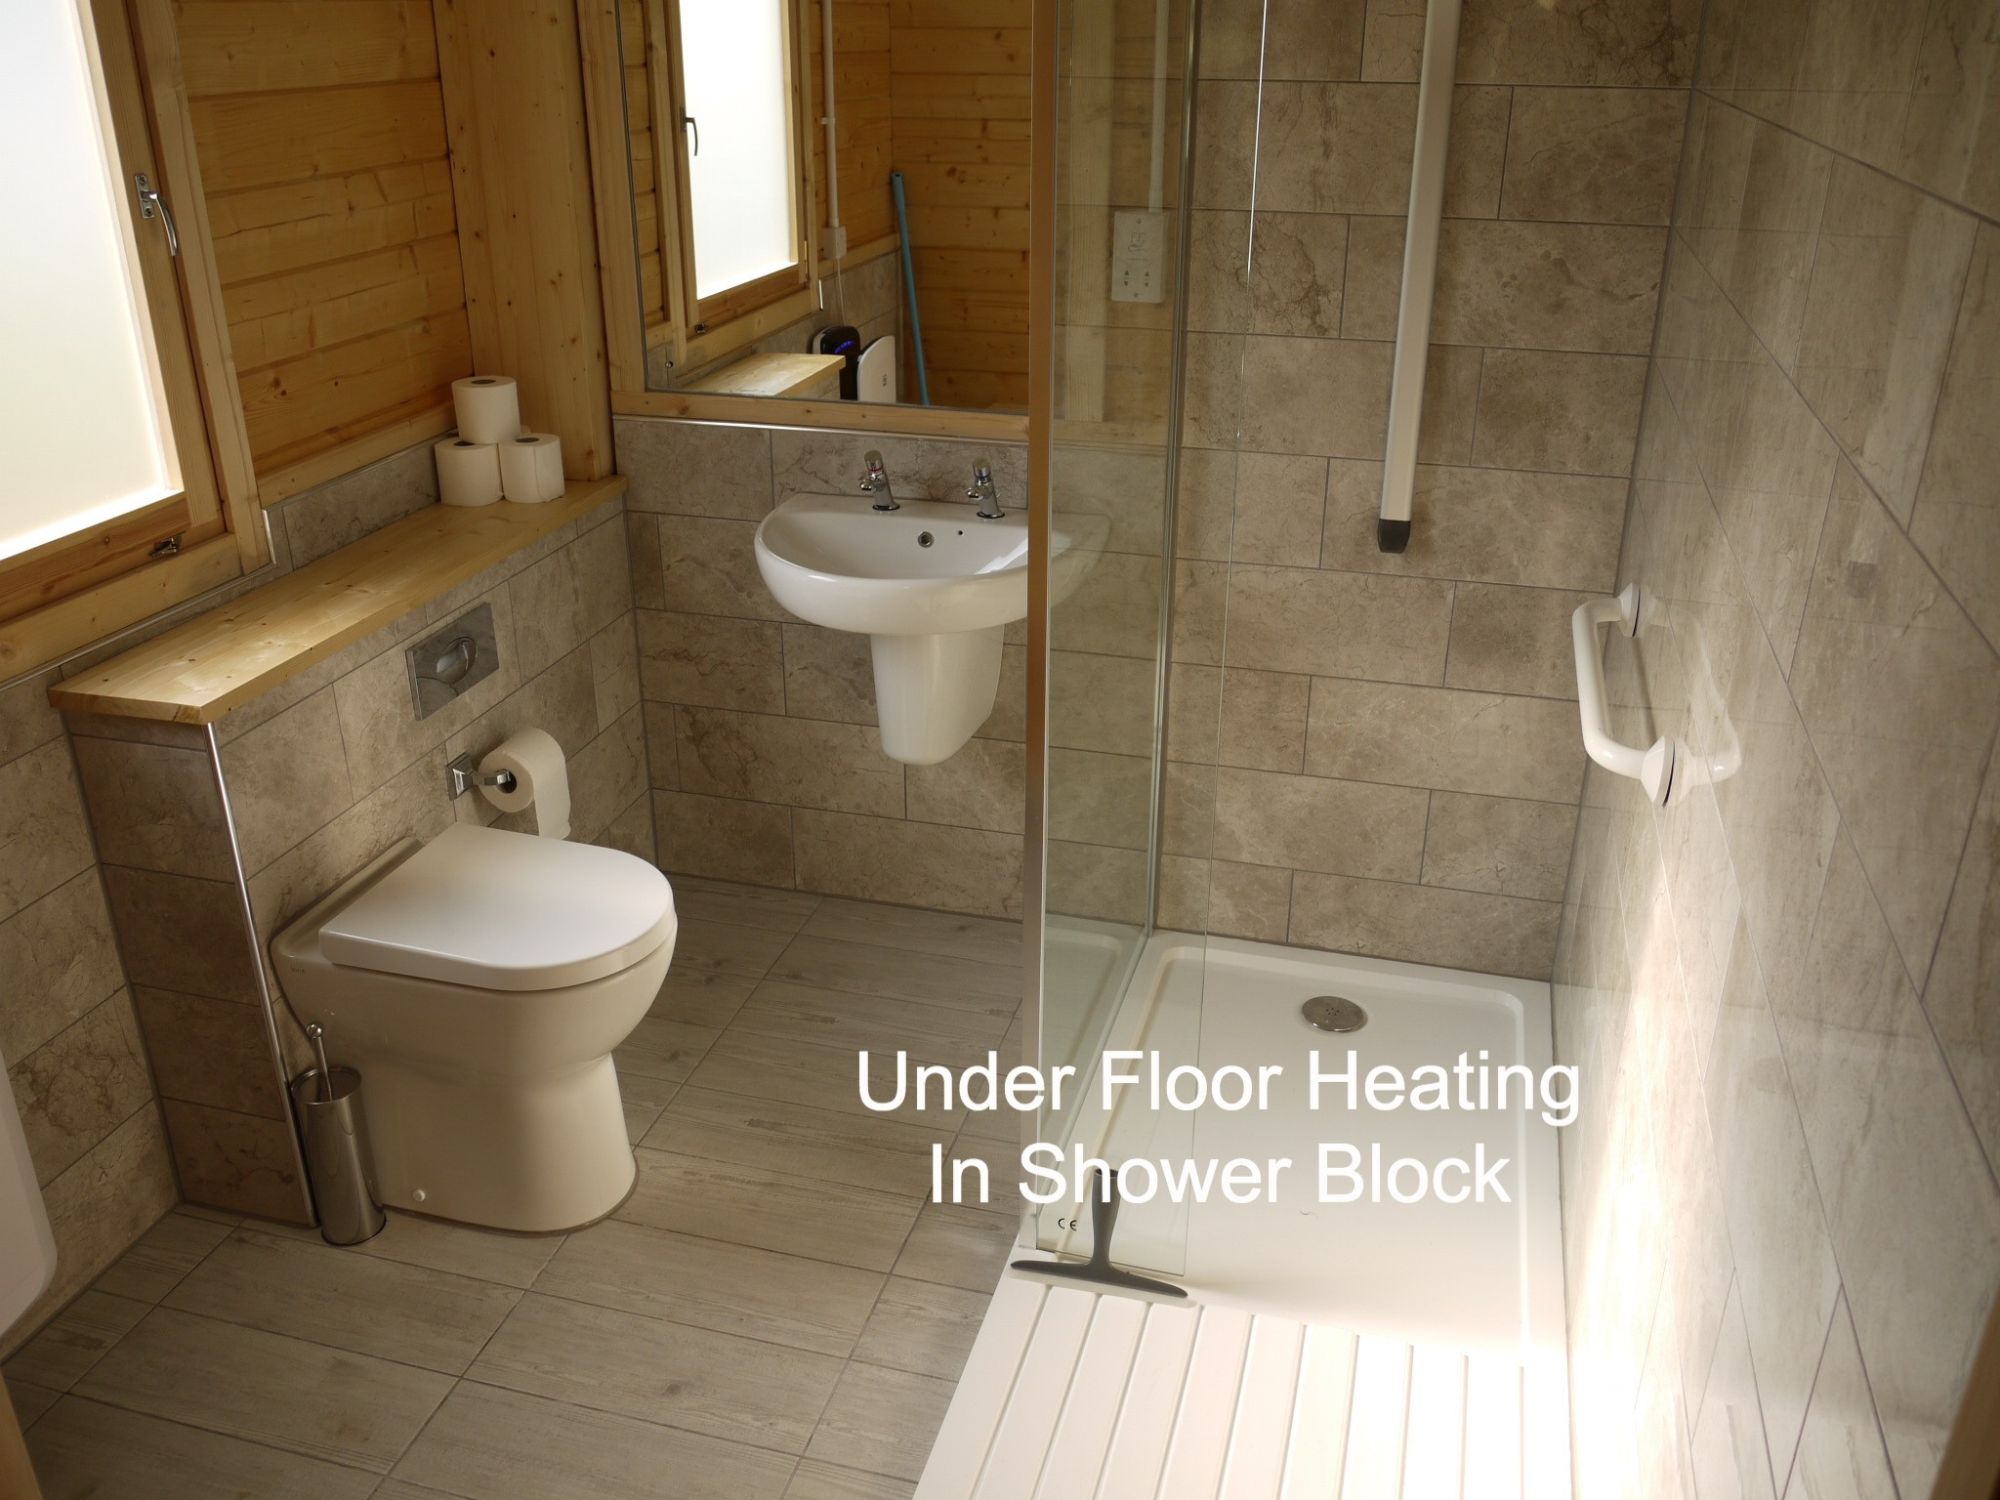 inside-shower-block-caption2